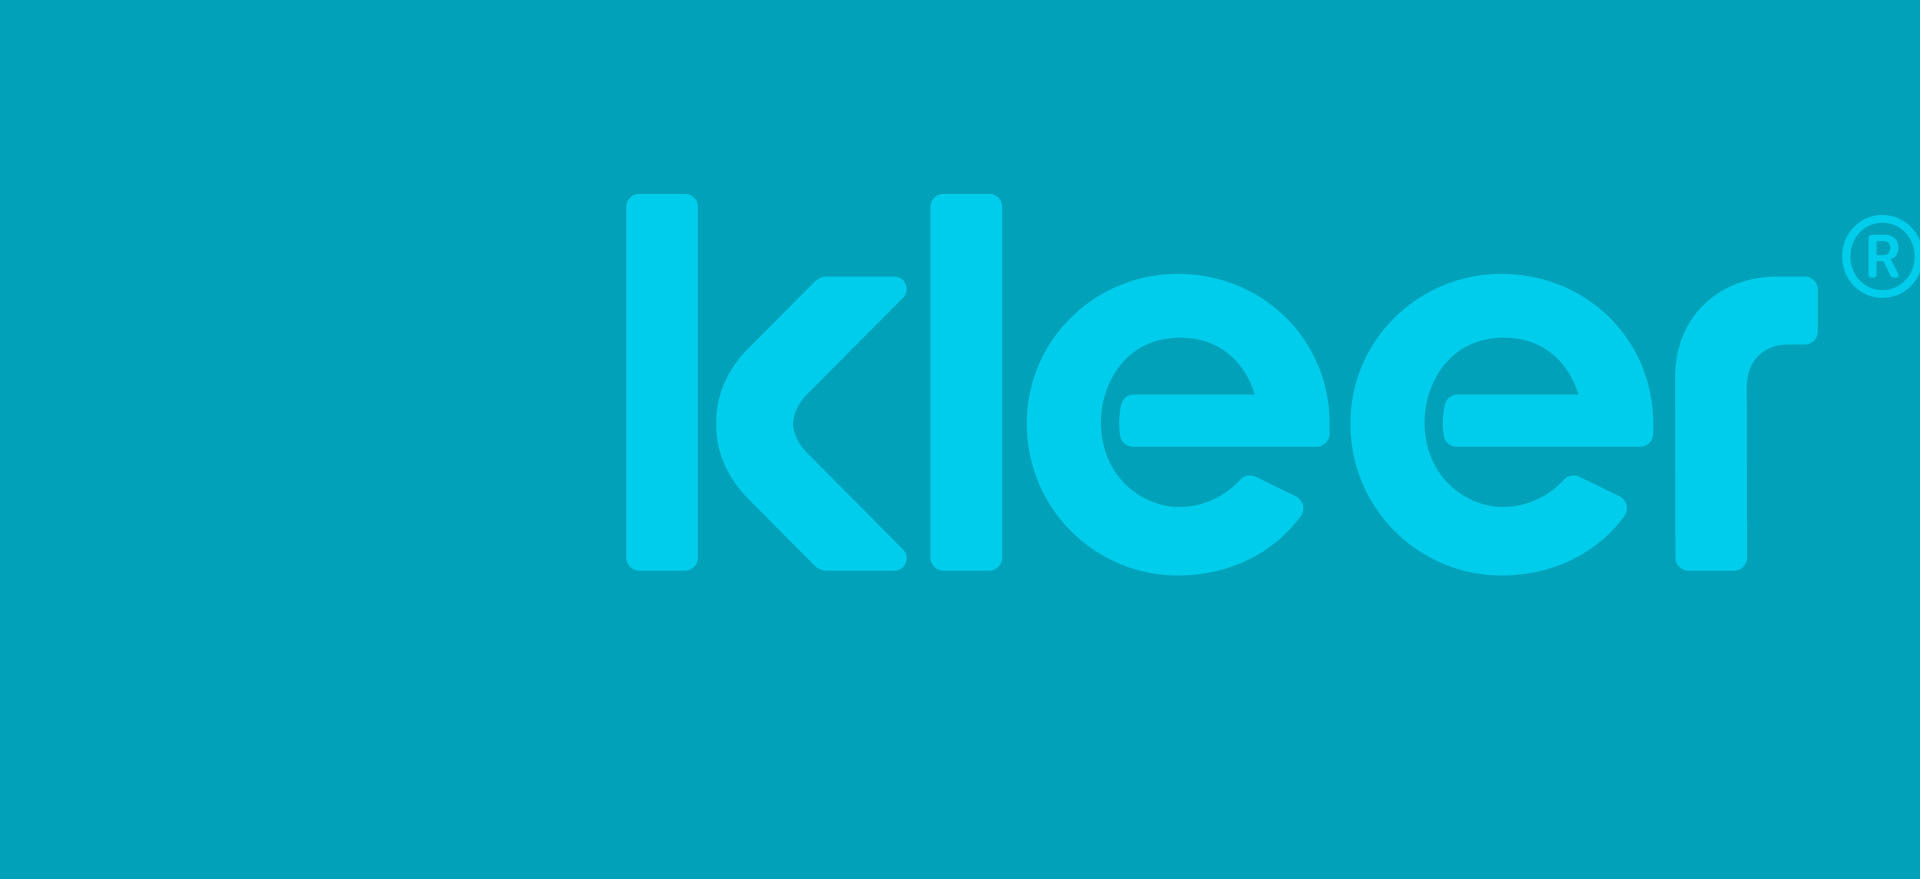 Kleer-Header-Graphic